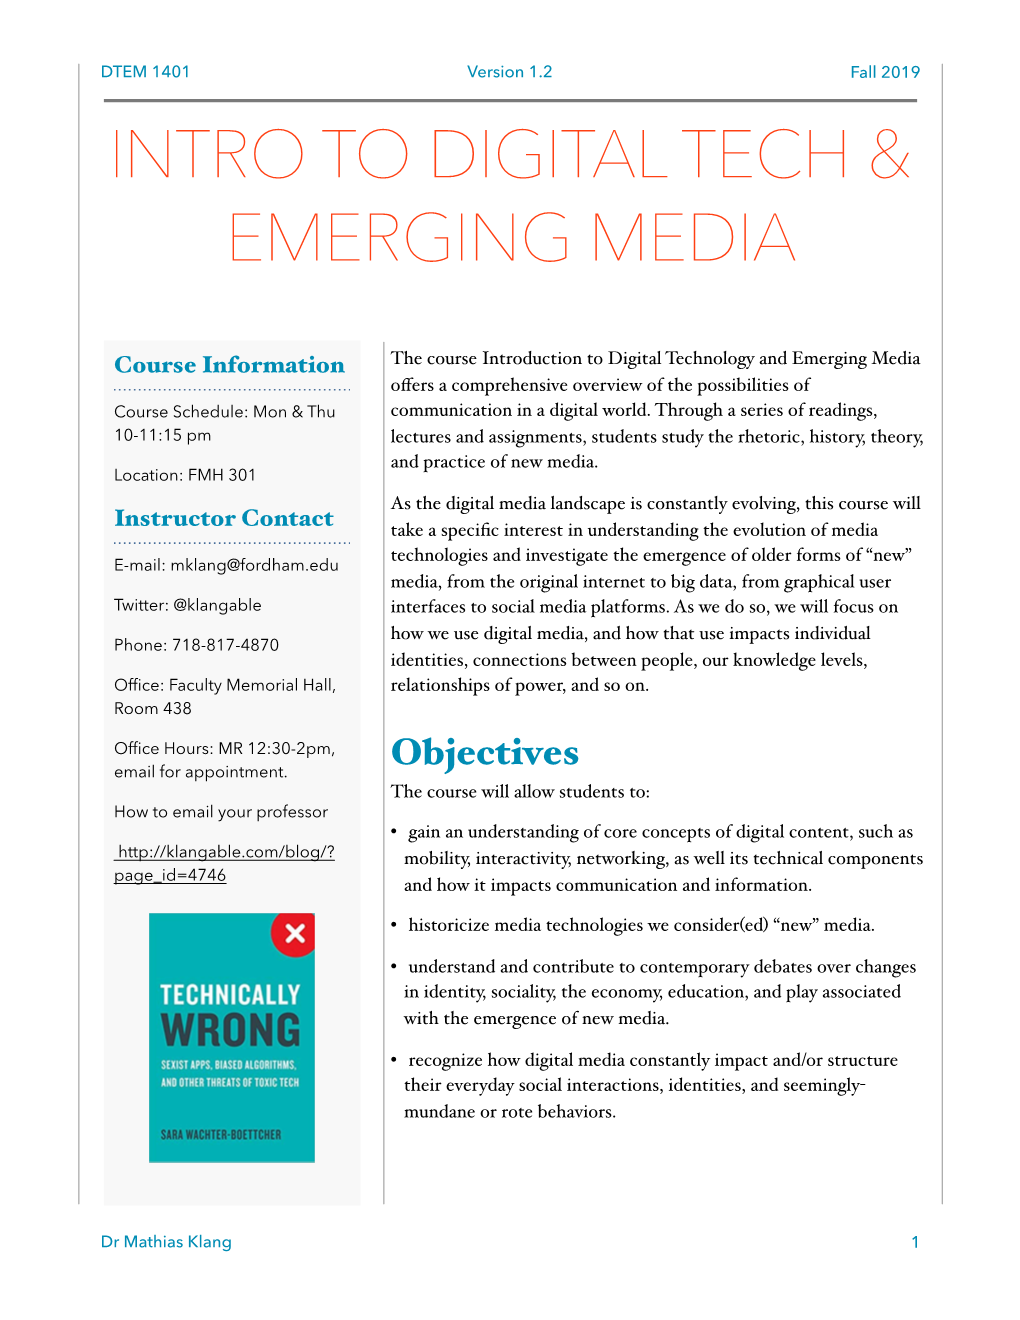 Intro to Digital Tech & Emerging Media